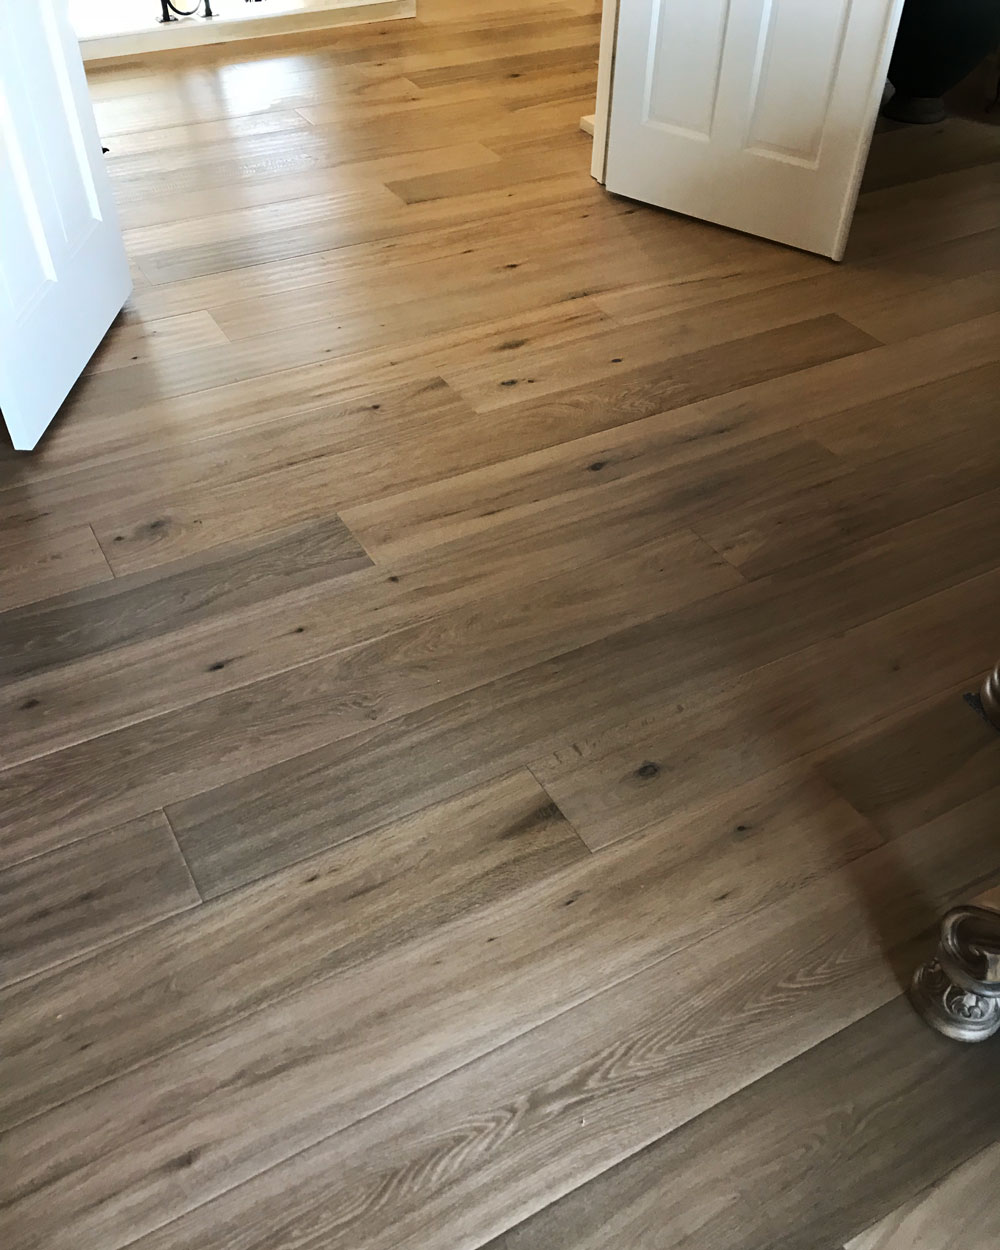 Room with brown hardwood floors